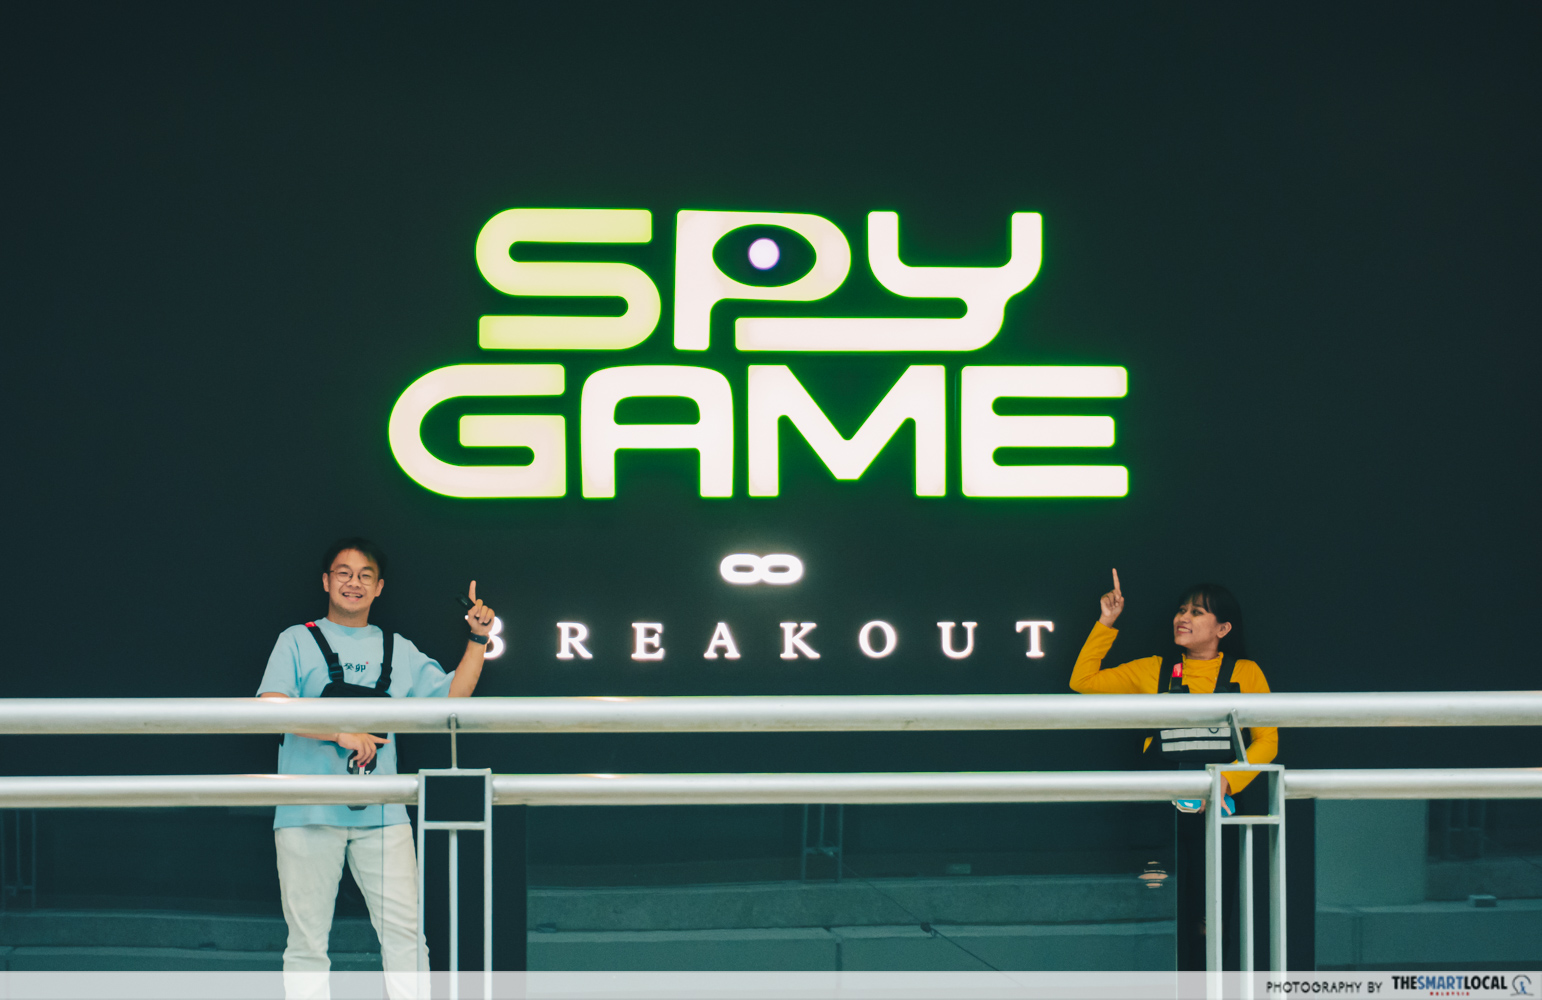 SPY Game - sign